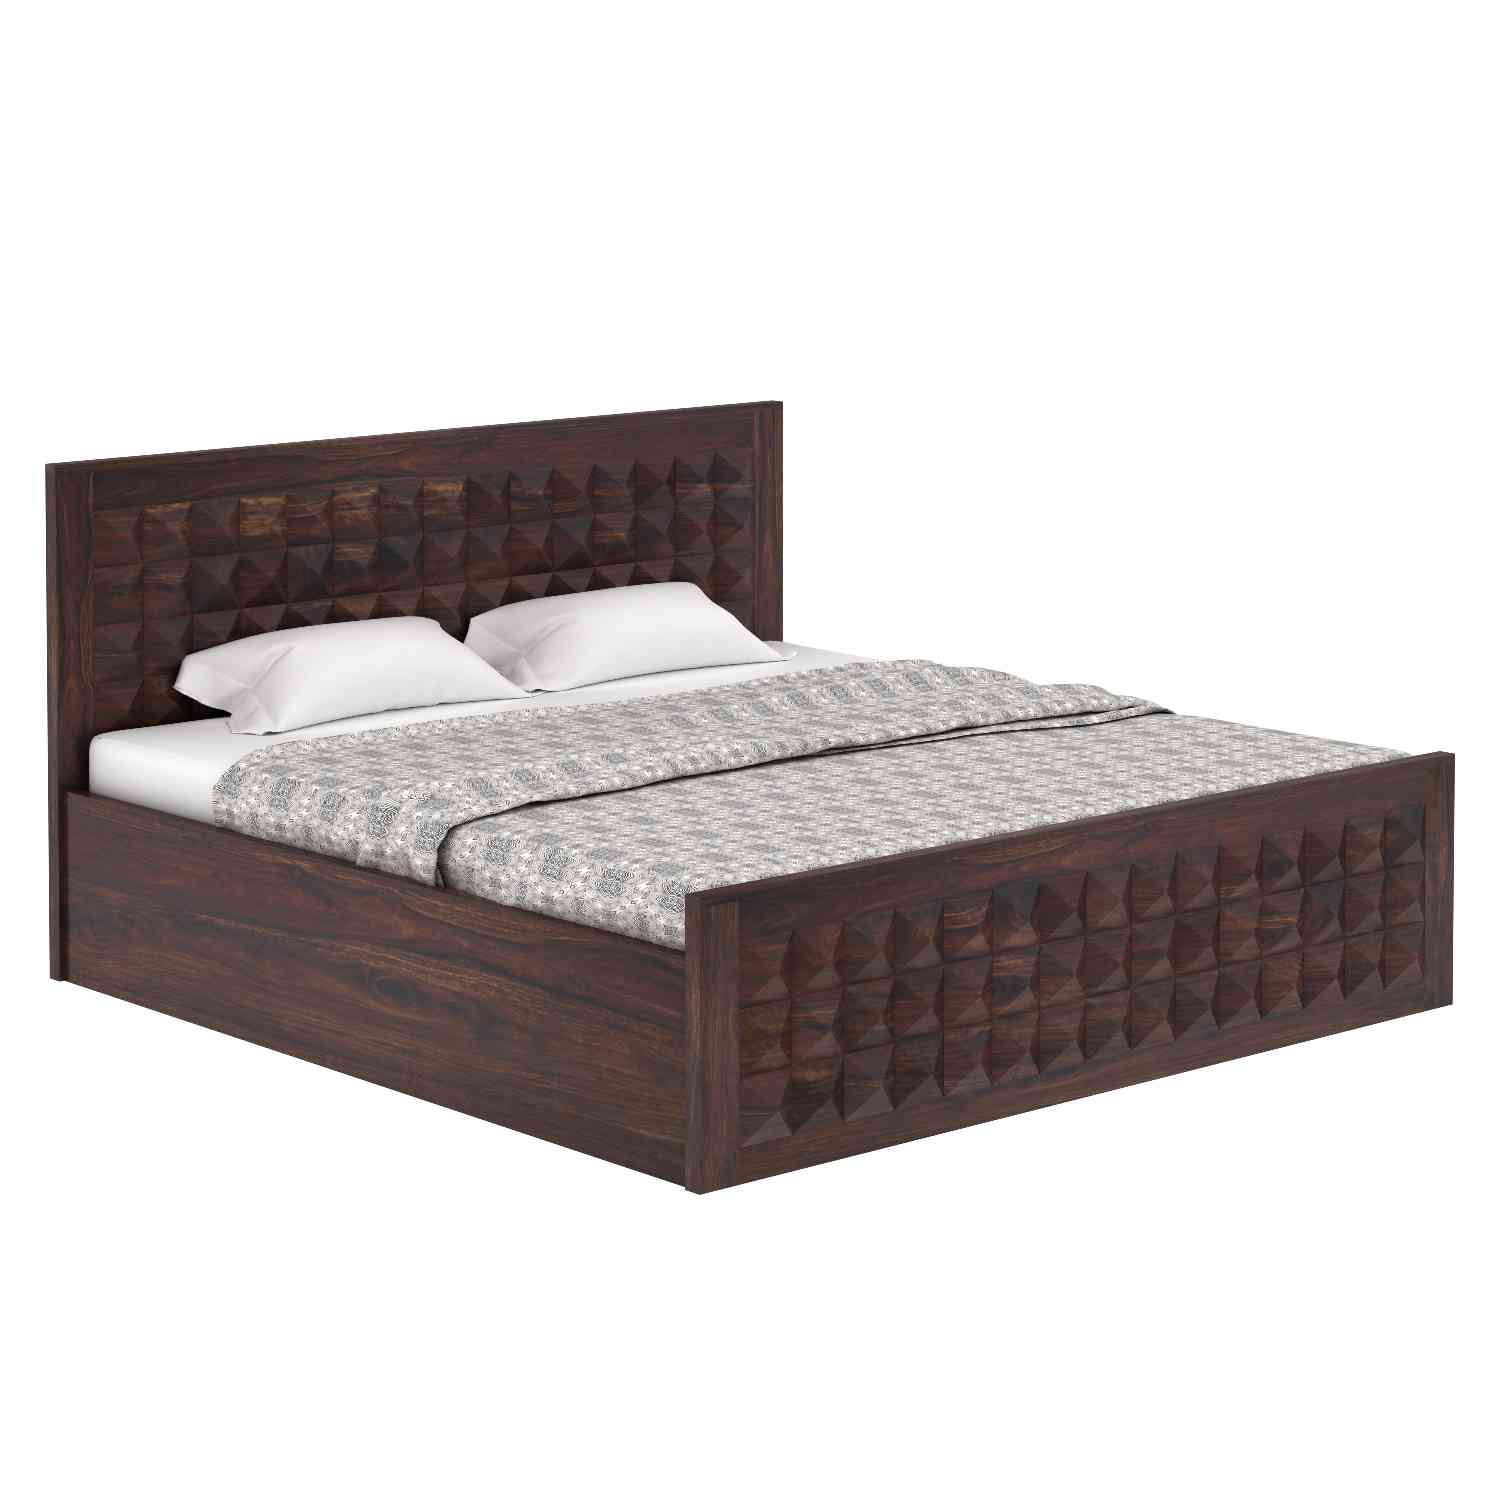 Sofia Solid Sheesham Wood Hydraulic Bed With Box Storage (Queen Size, Walnut Finish)